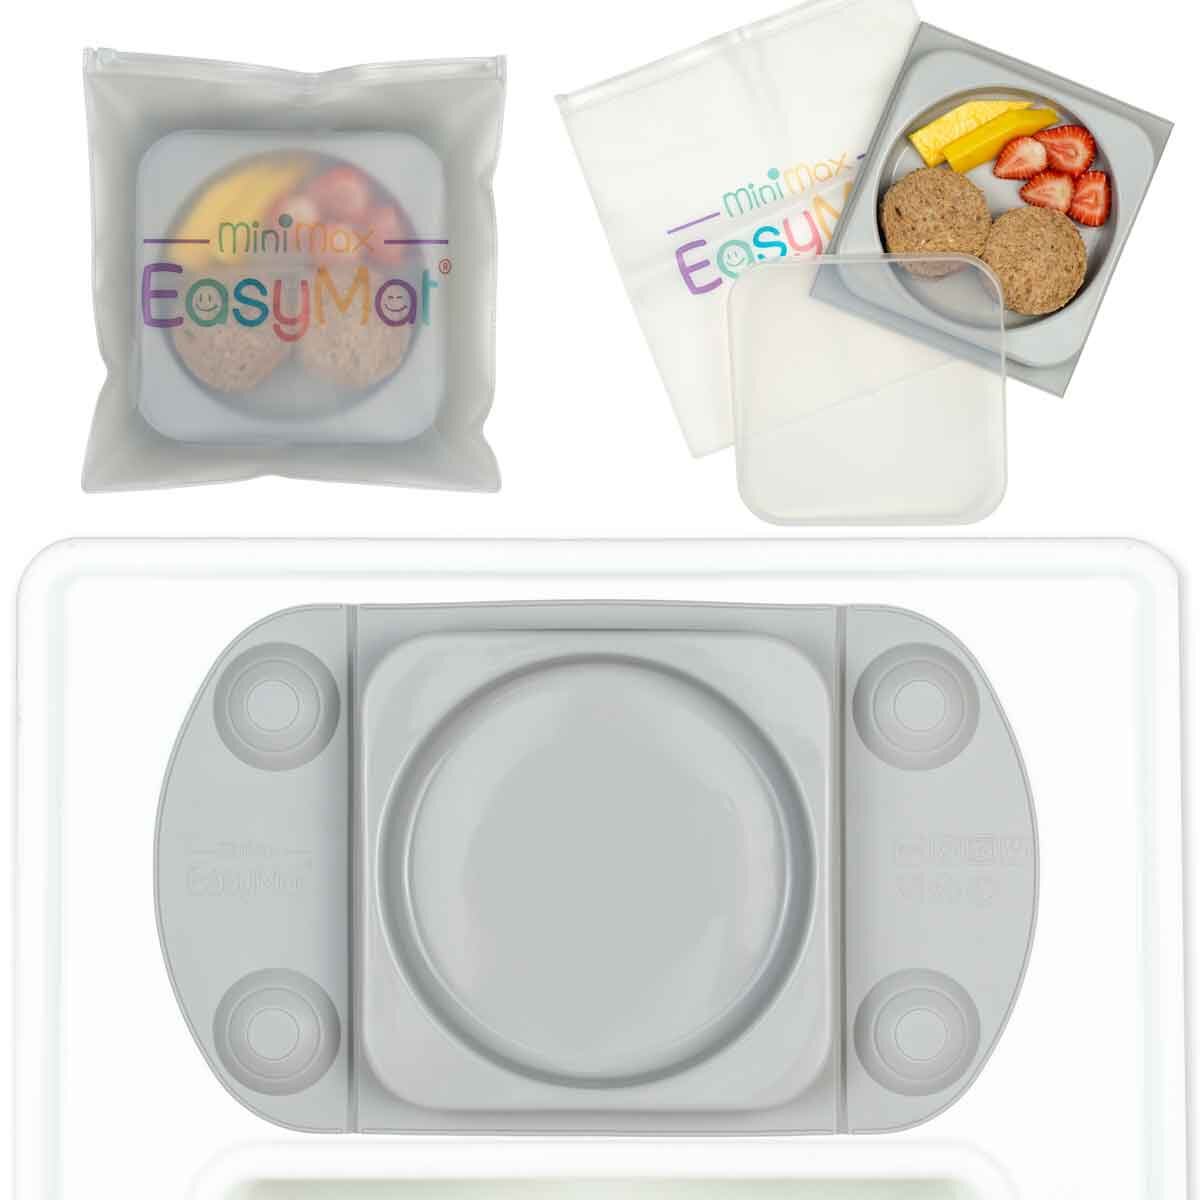 EasyTots EasyMat MiniMax Open Suction Weaning Plate in Grey